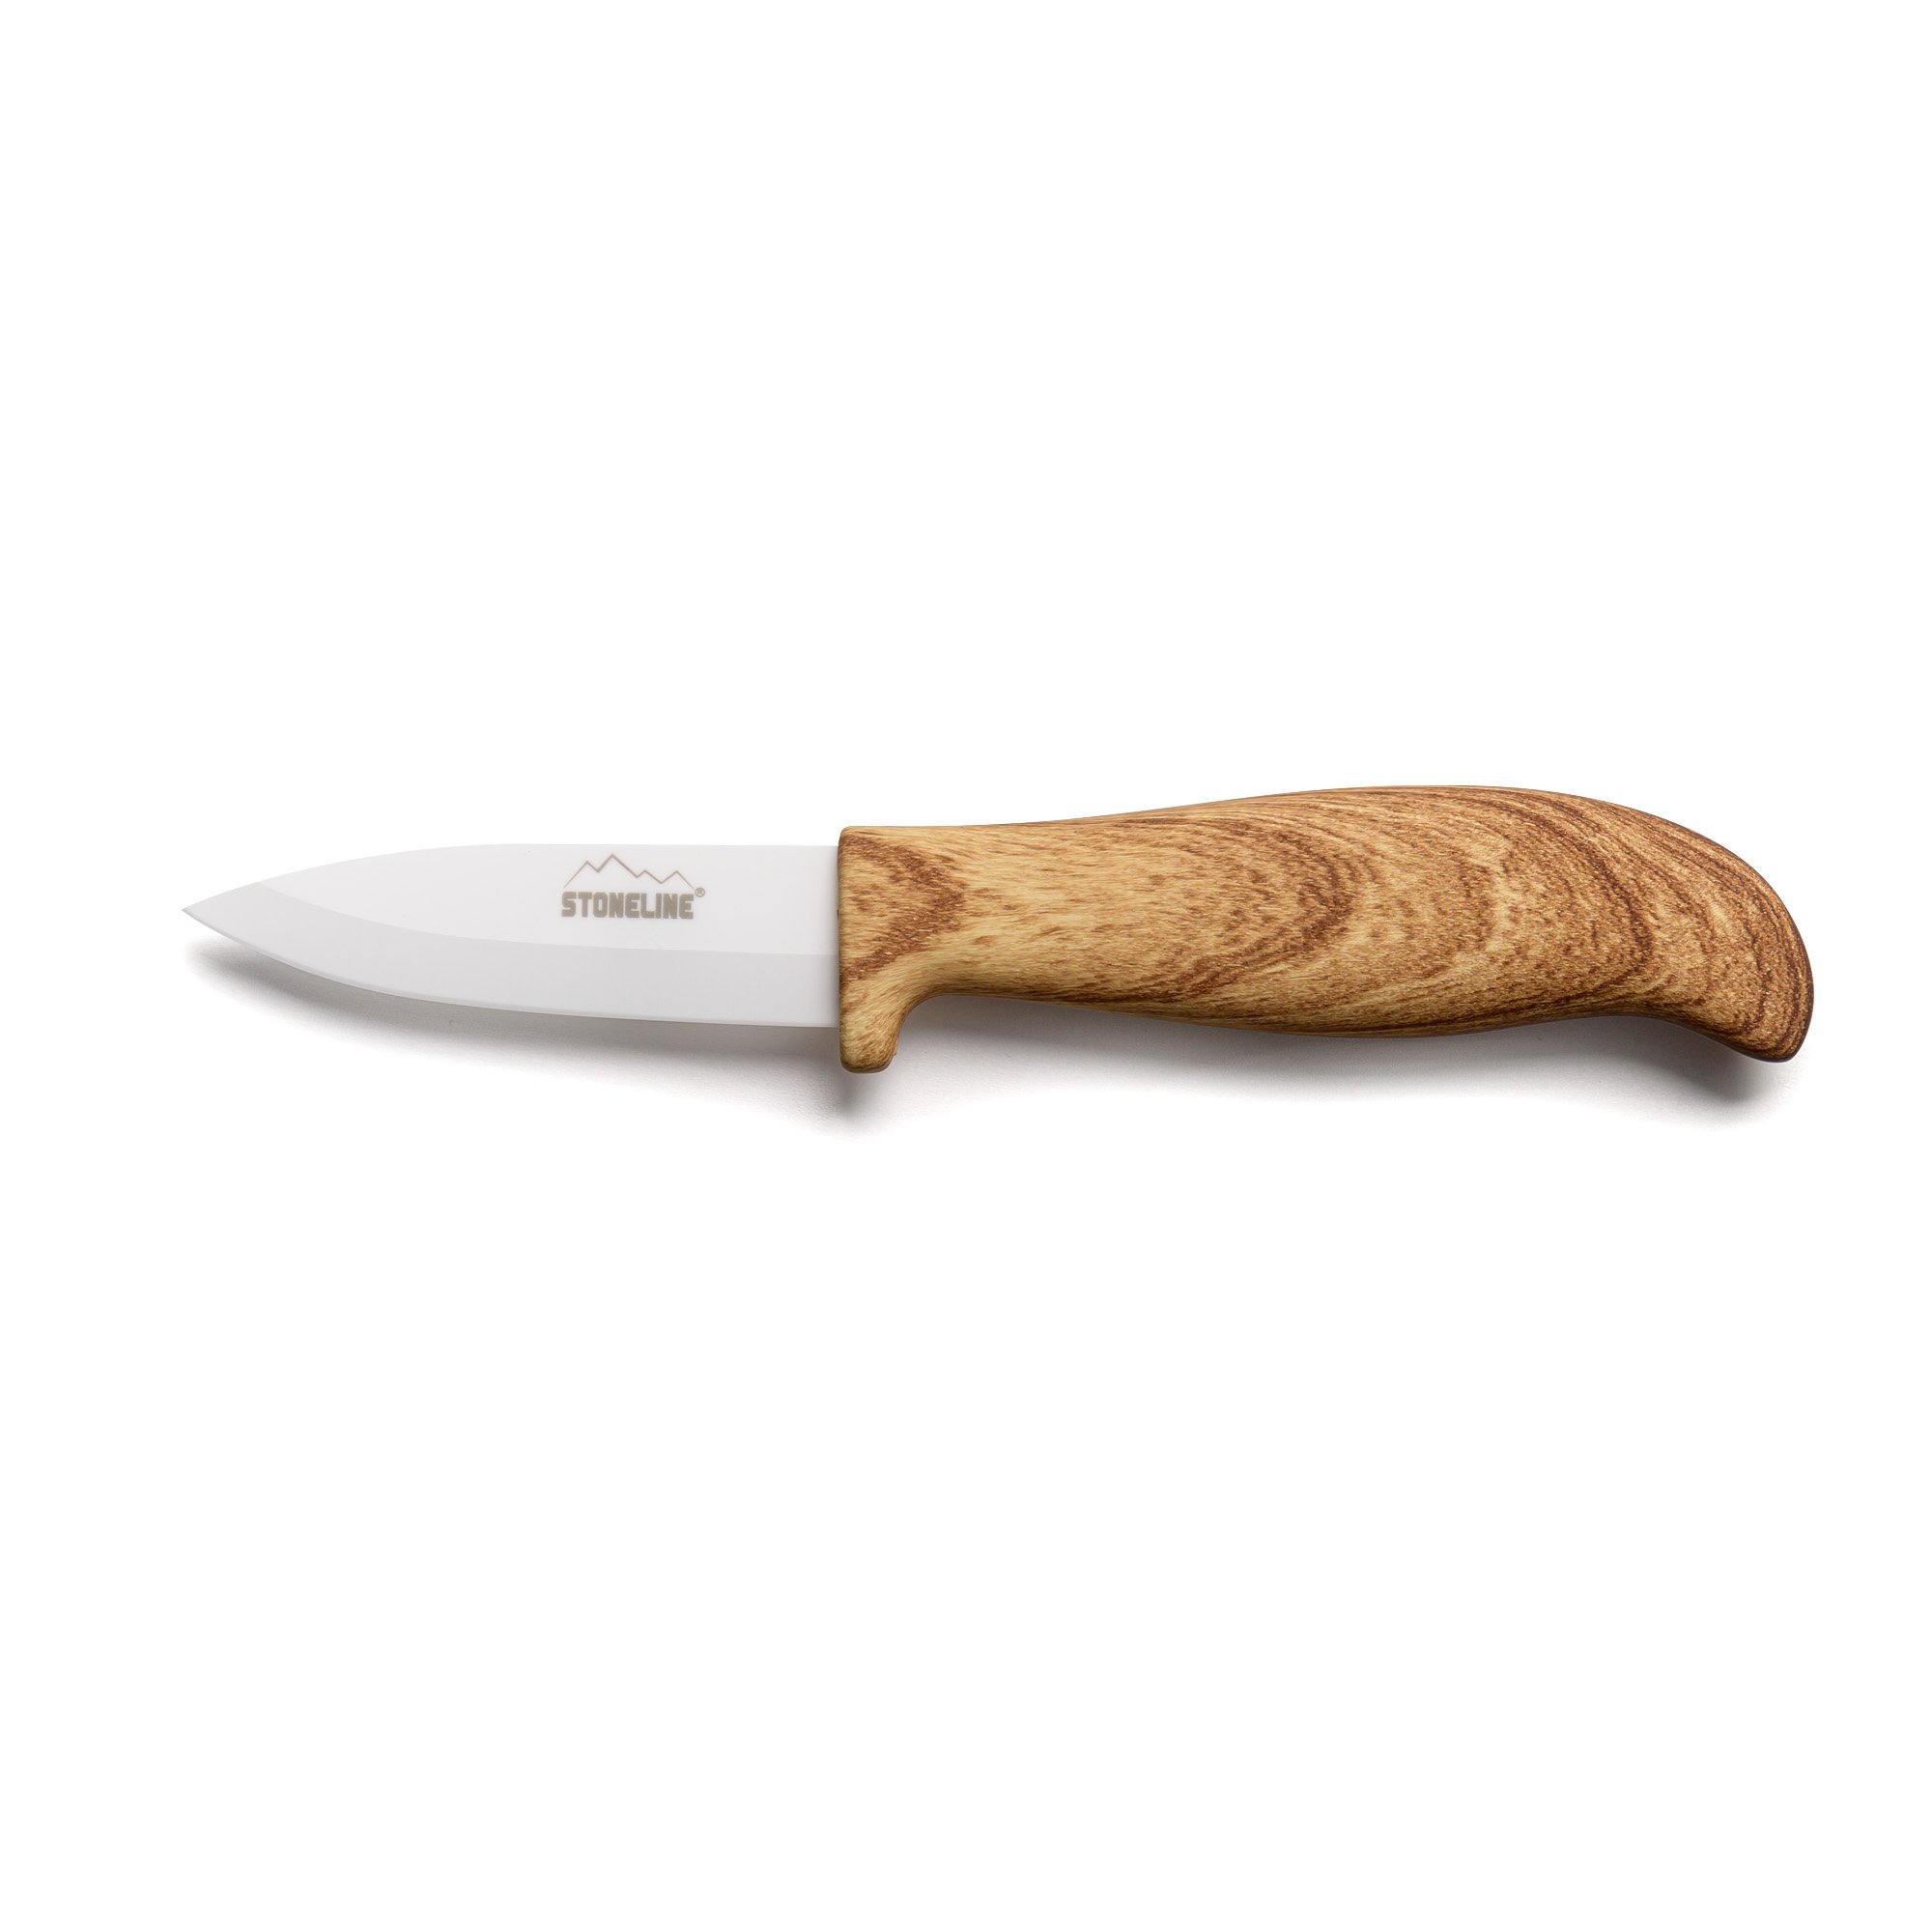 STONELINE® CERAMIC Knife 18 cm Kitchen Knife, Safety Sheath | Back to Nature